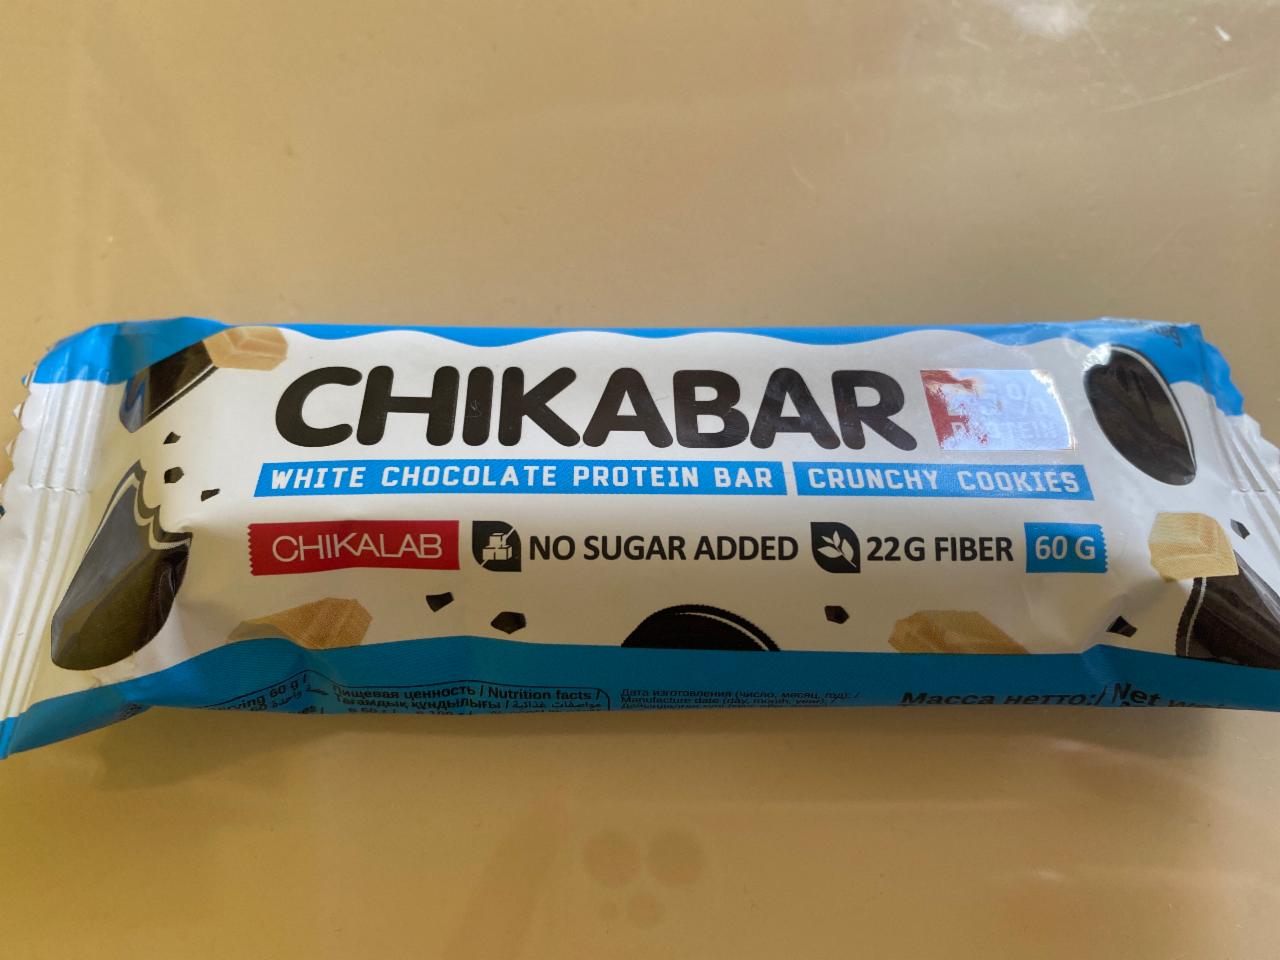 Фото - Chikabar White Chocolate Protein Bar Crunchy Cookies Chikalab